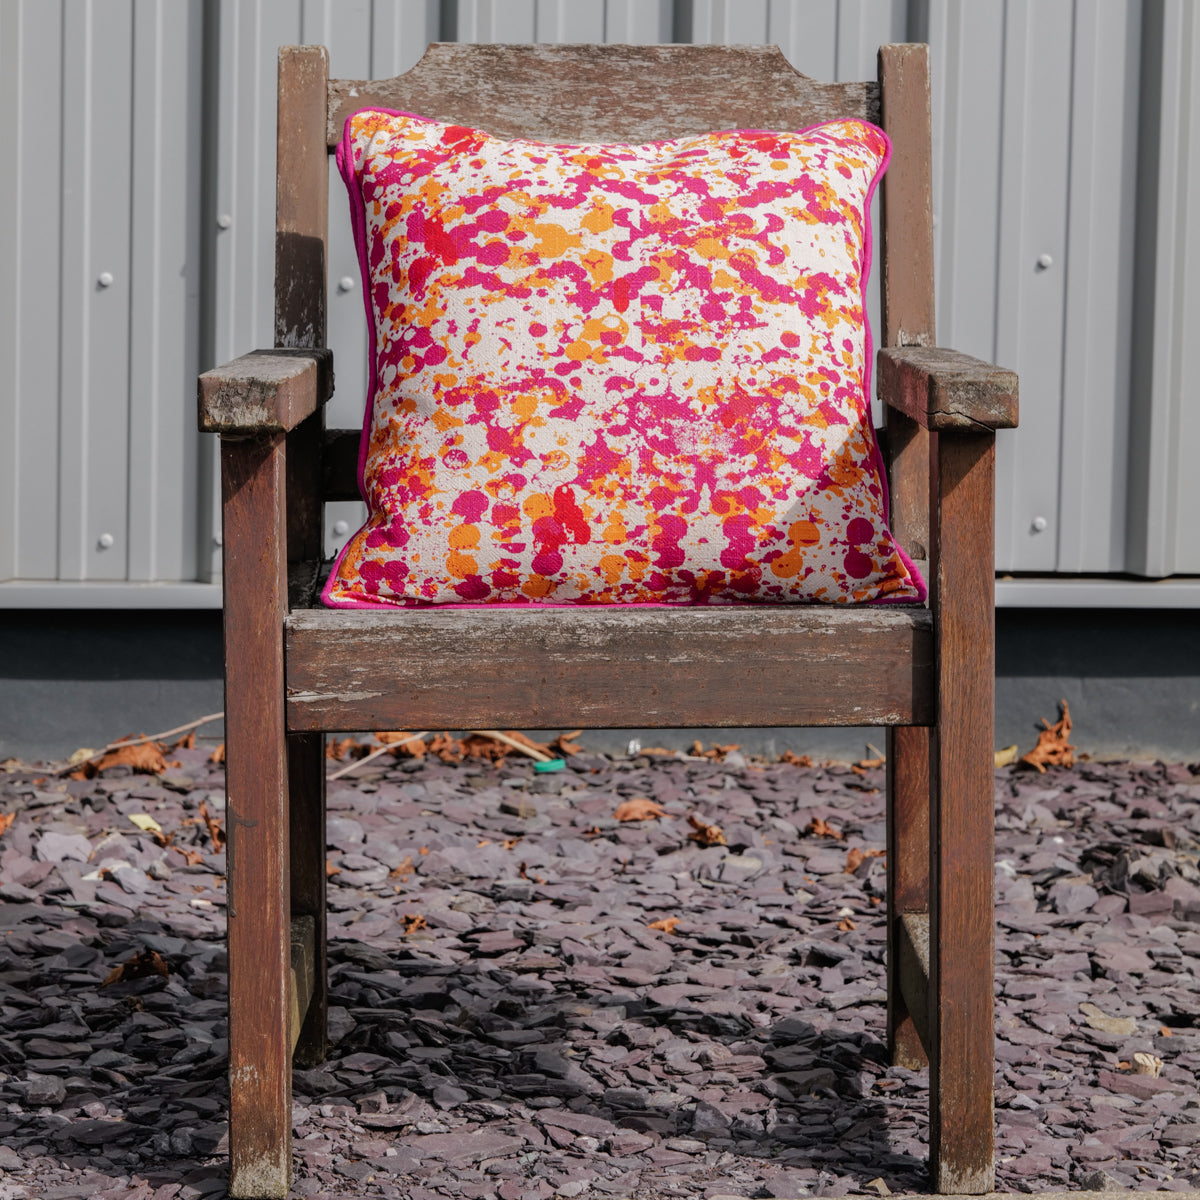 Laz Studio House Spots Cushion (Pink, Orange, Red)